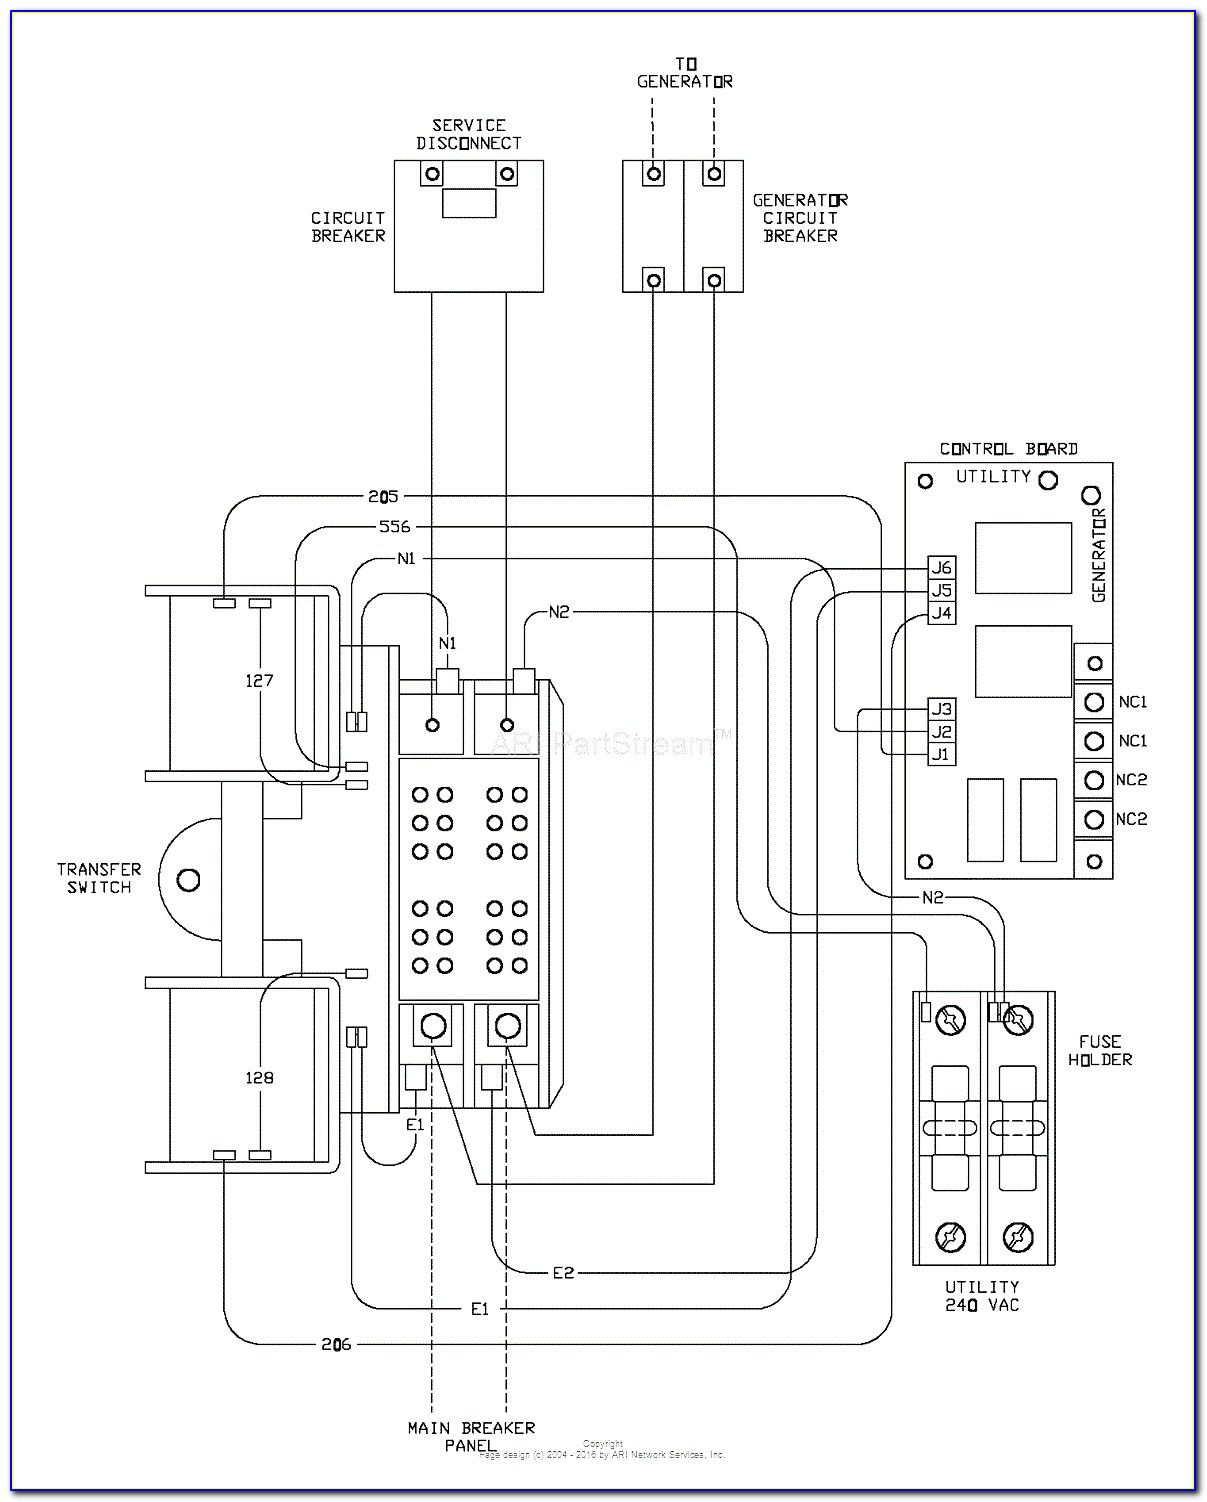 Generac 16 Circuit Transfer Switch Wiring Diagram